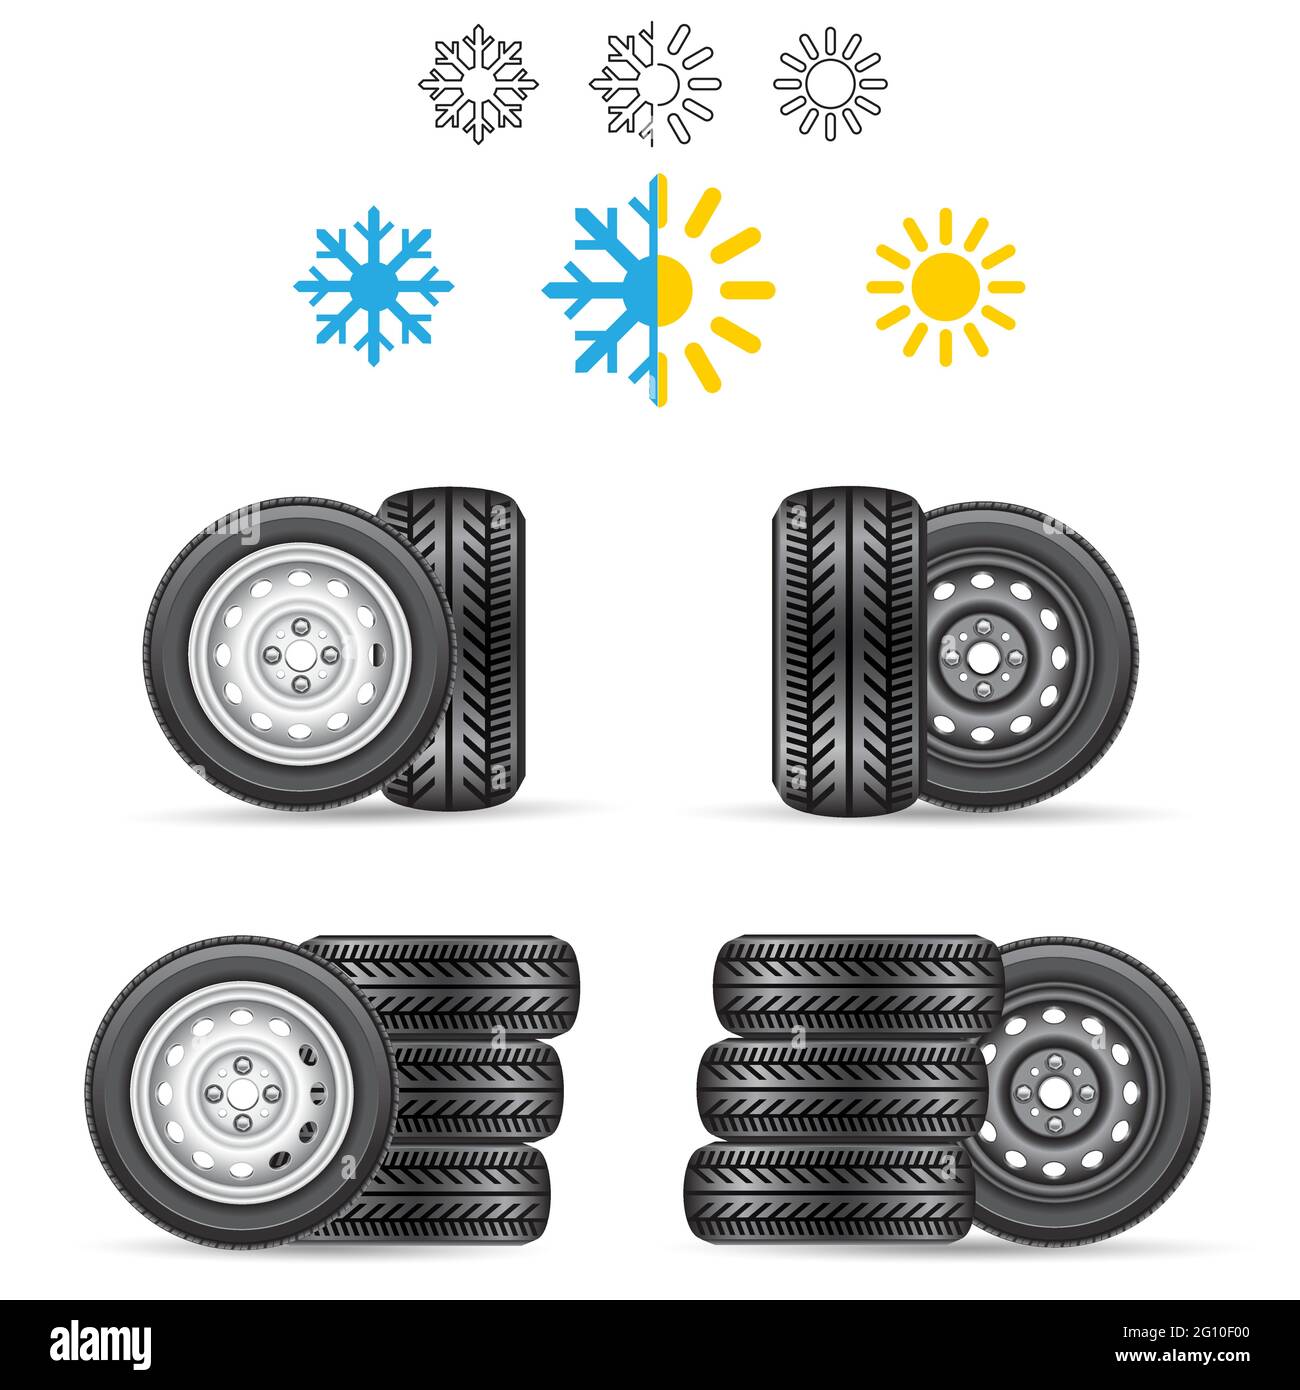 https://c8.alamy.com/comp/2G10F00/car-auto-tire-set-all-season-winter-summer-2G10F00.jpg